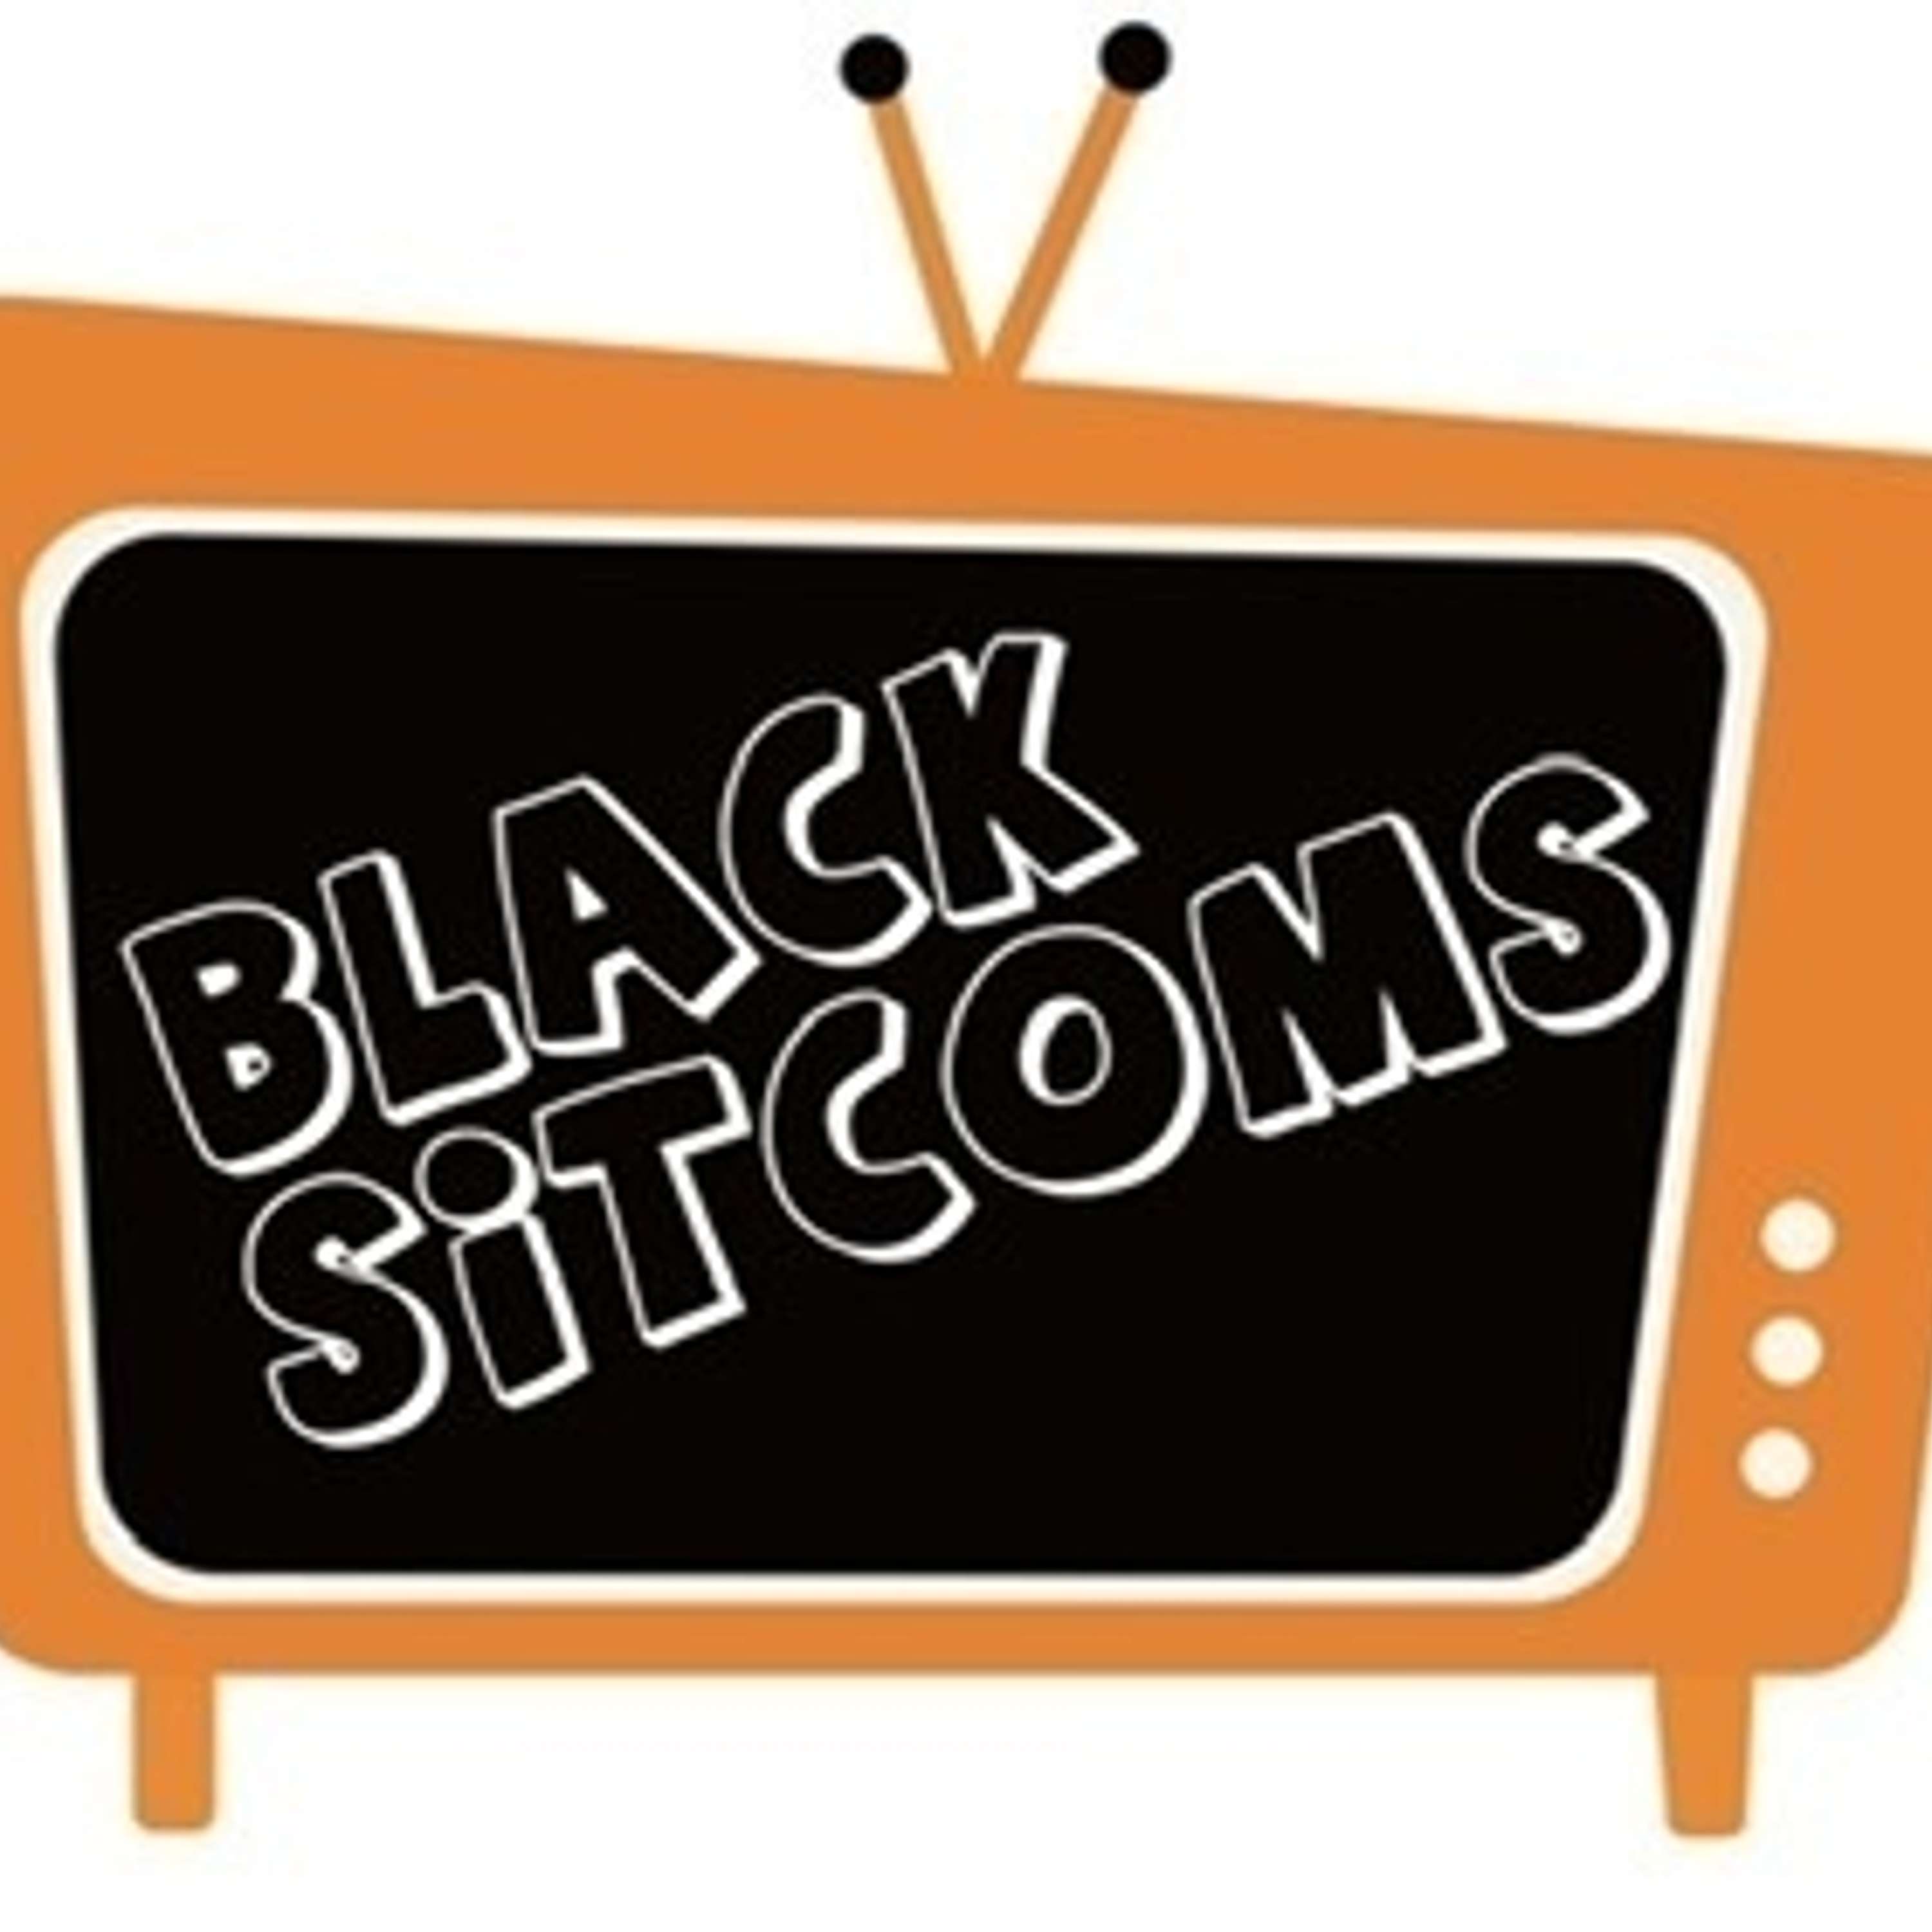 Black Sitcoms